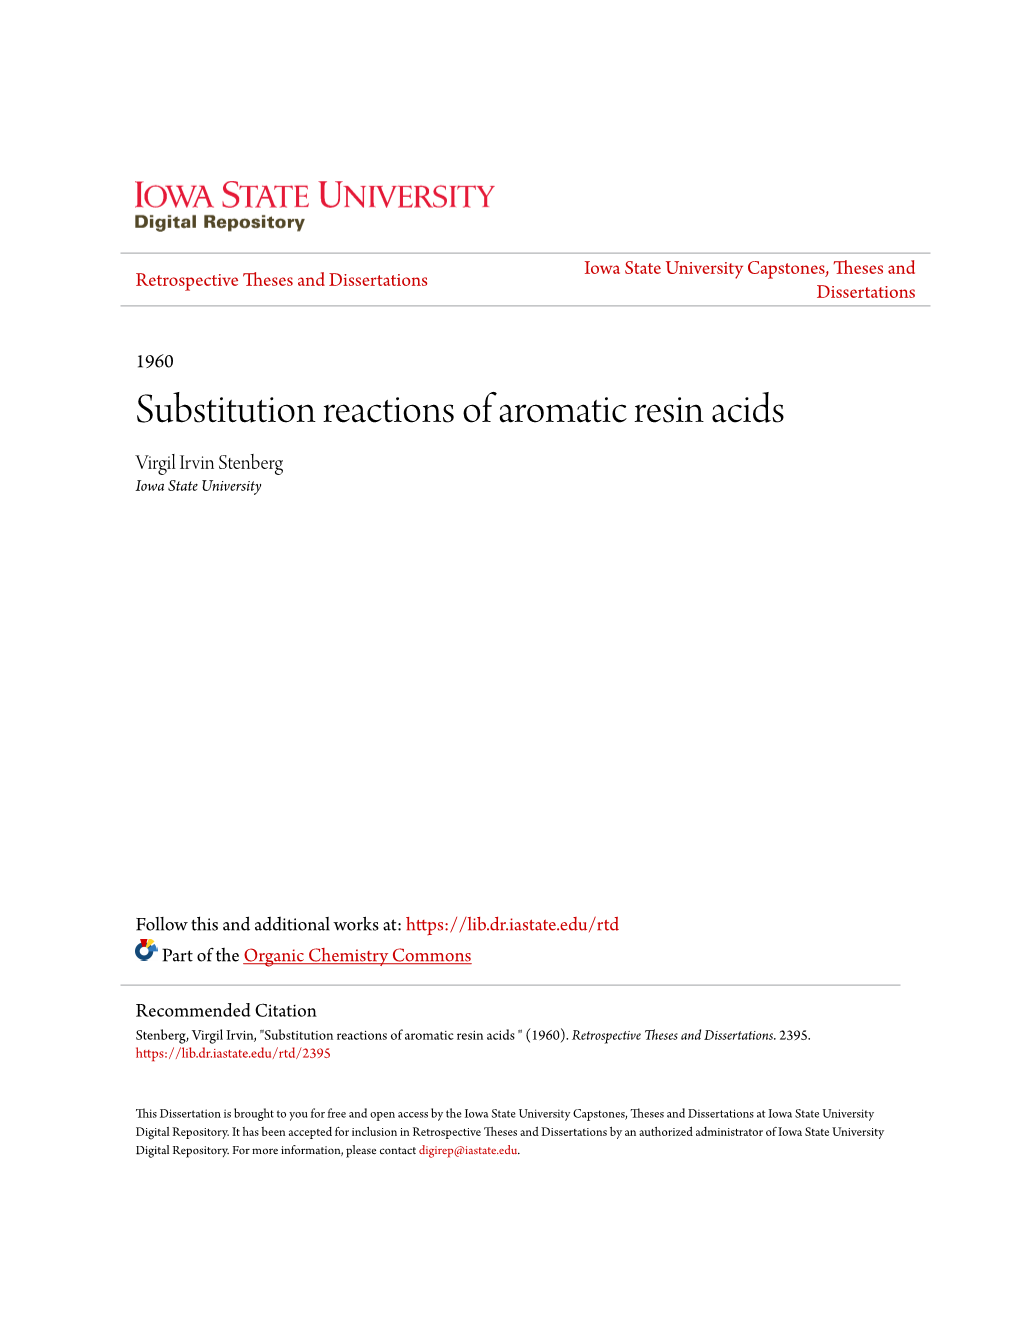 Substitution Reactions of Aromatic Resin Acids Virgil Irvin Stenberg Iowa State University